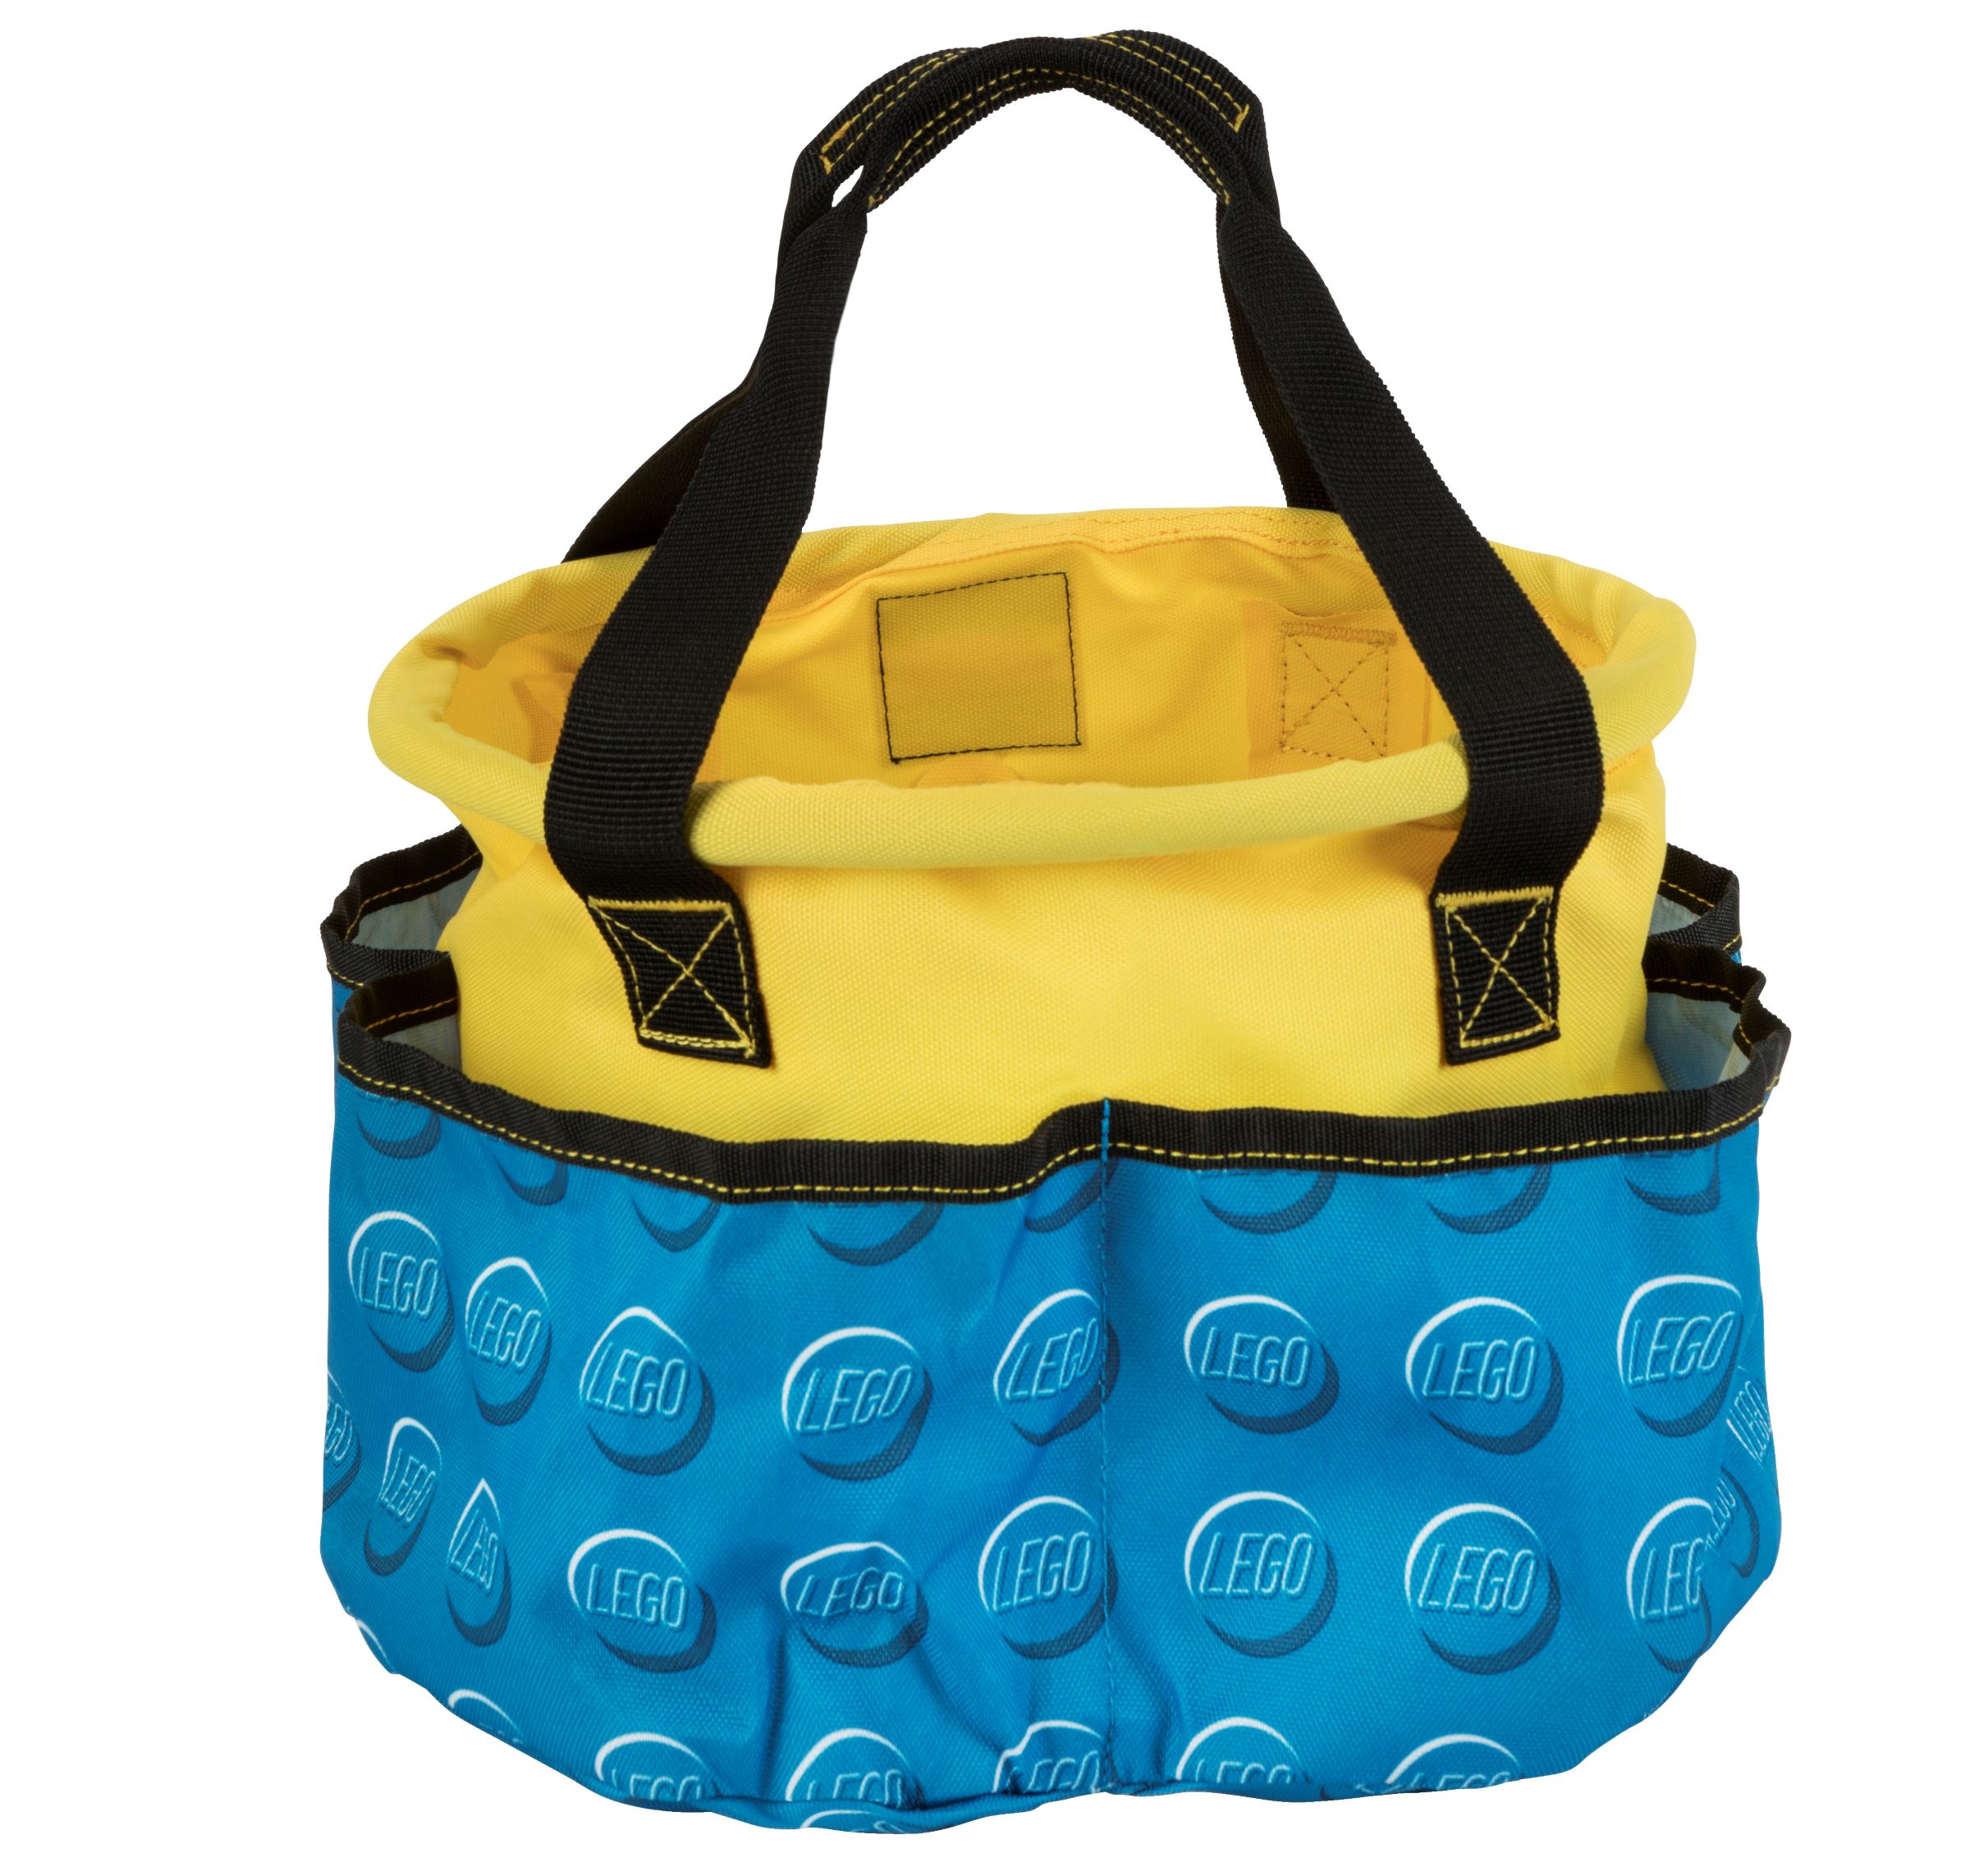 LEGO: Bucket Drawstring Bag - Teal (VIP, Limited Edition, 5007488)